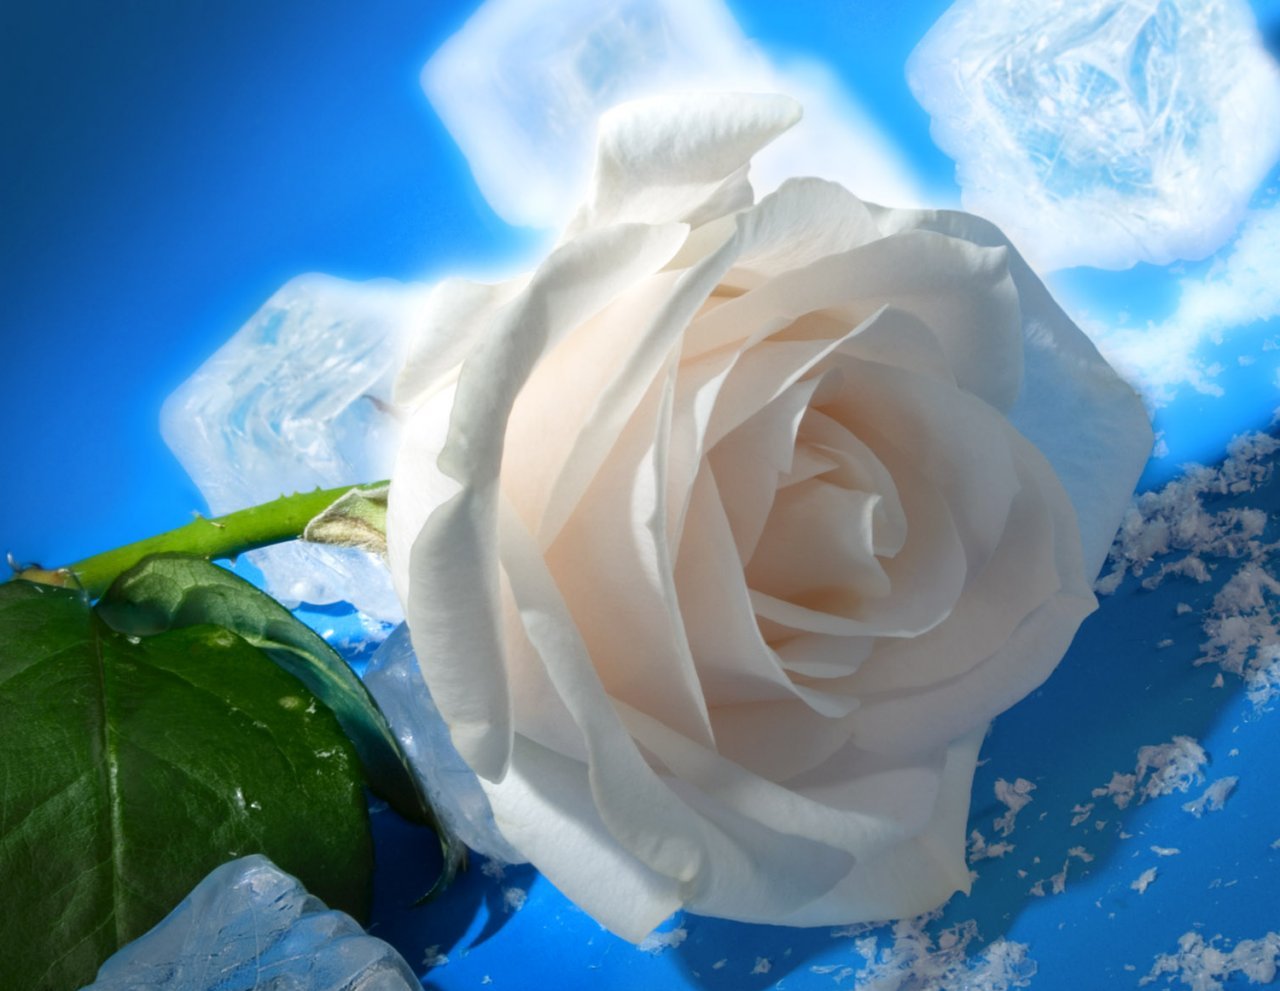 rose flower wallpaper hd free download,rose,flower,white,petal,garden roses